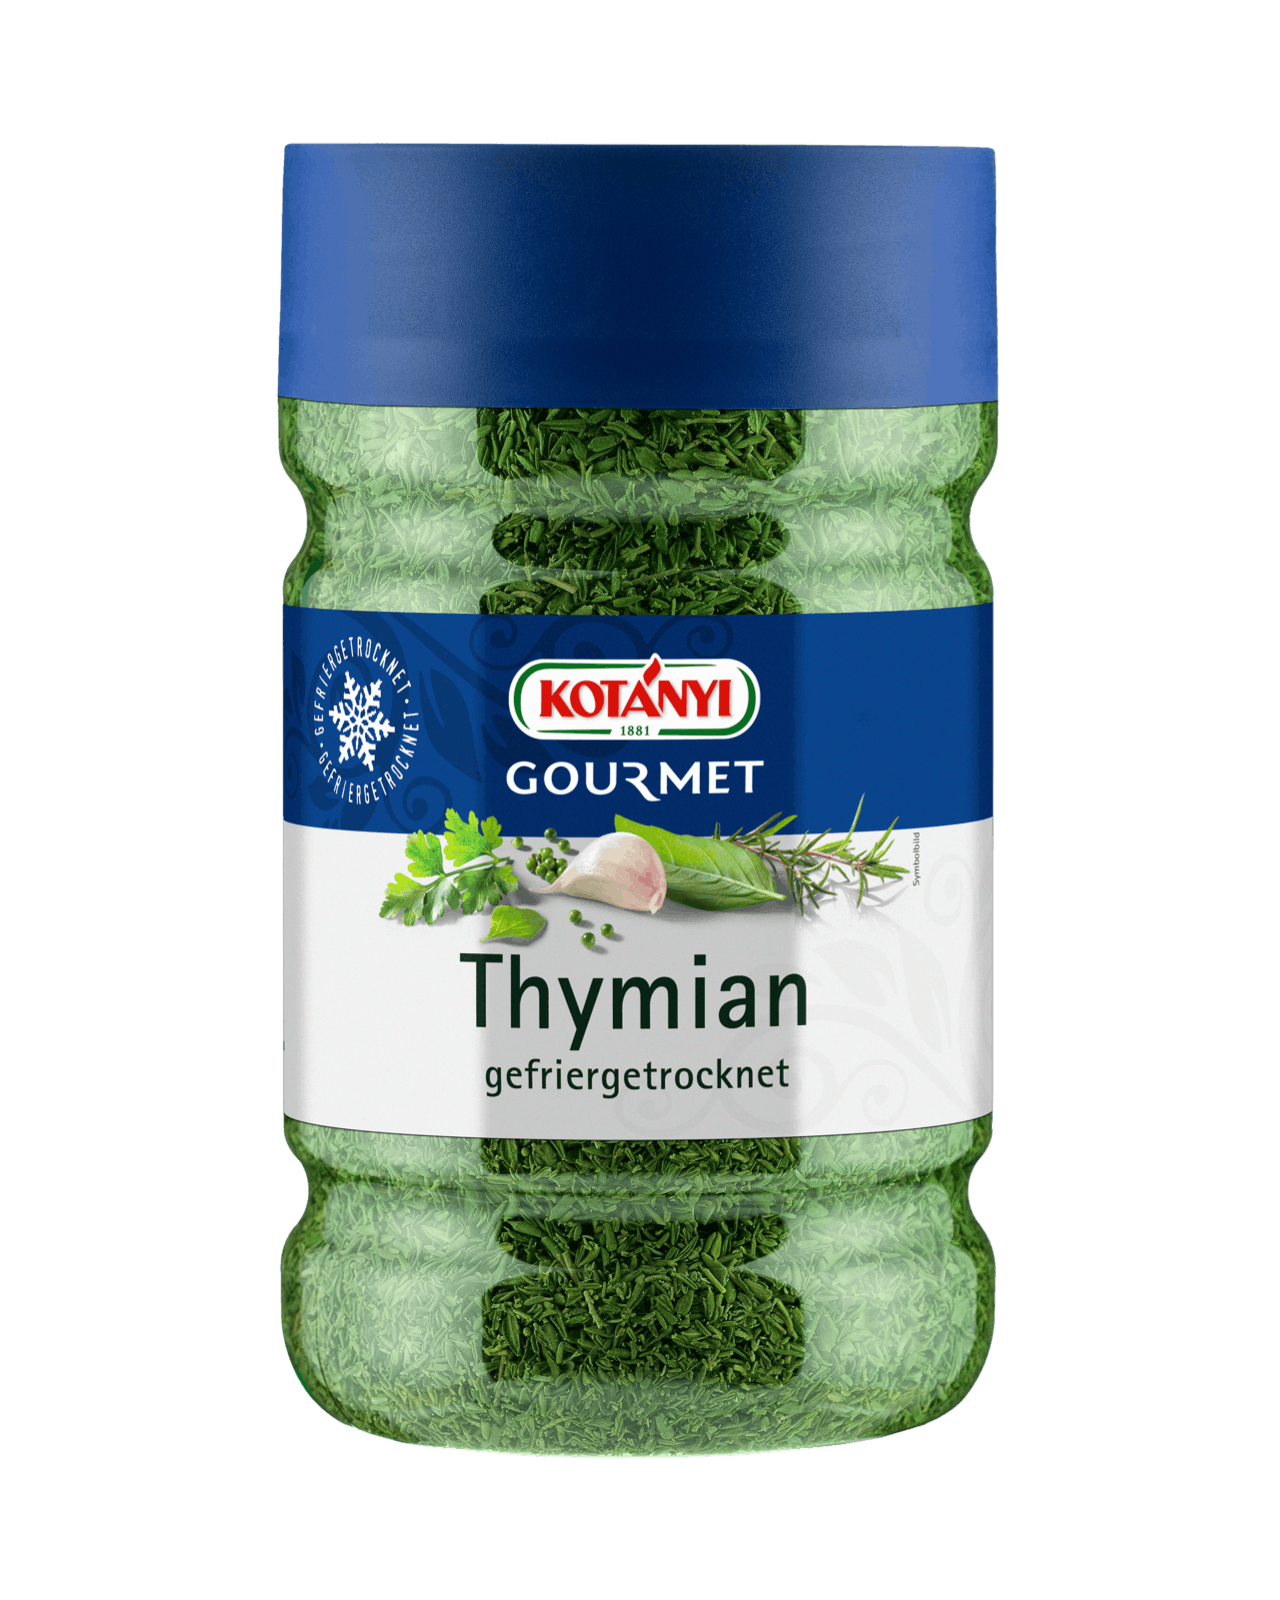 Kotányi Gourmet Thymian gefriergetrocknet in der 1200ccm Dose